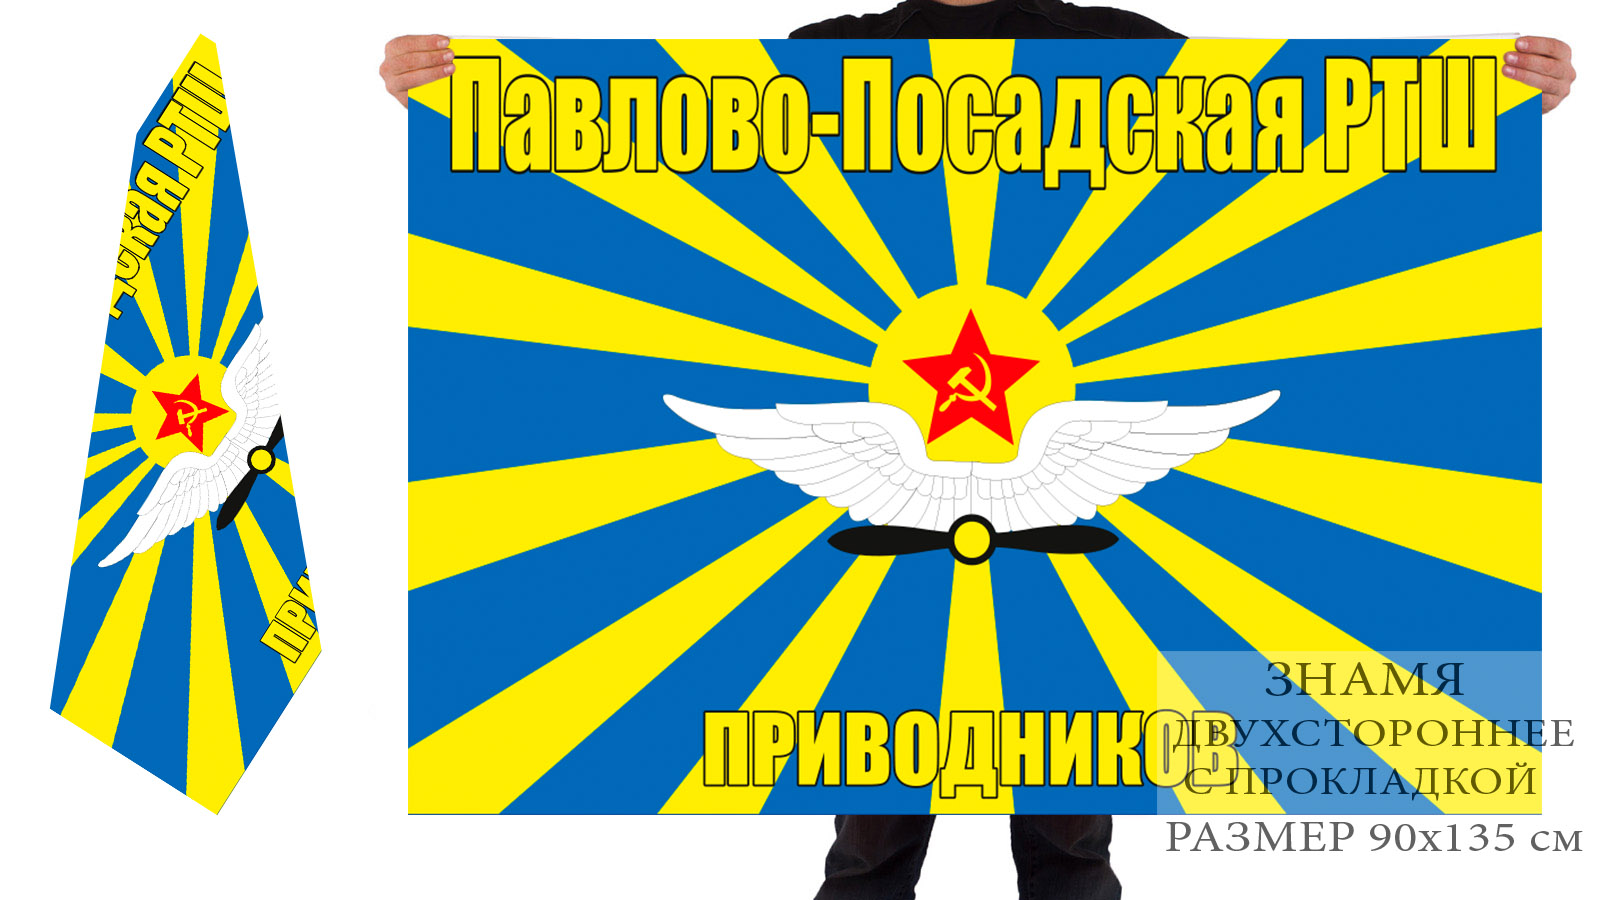 Двусторонний флаг Павлово-Посадской РТШ приводников